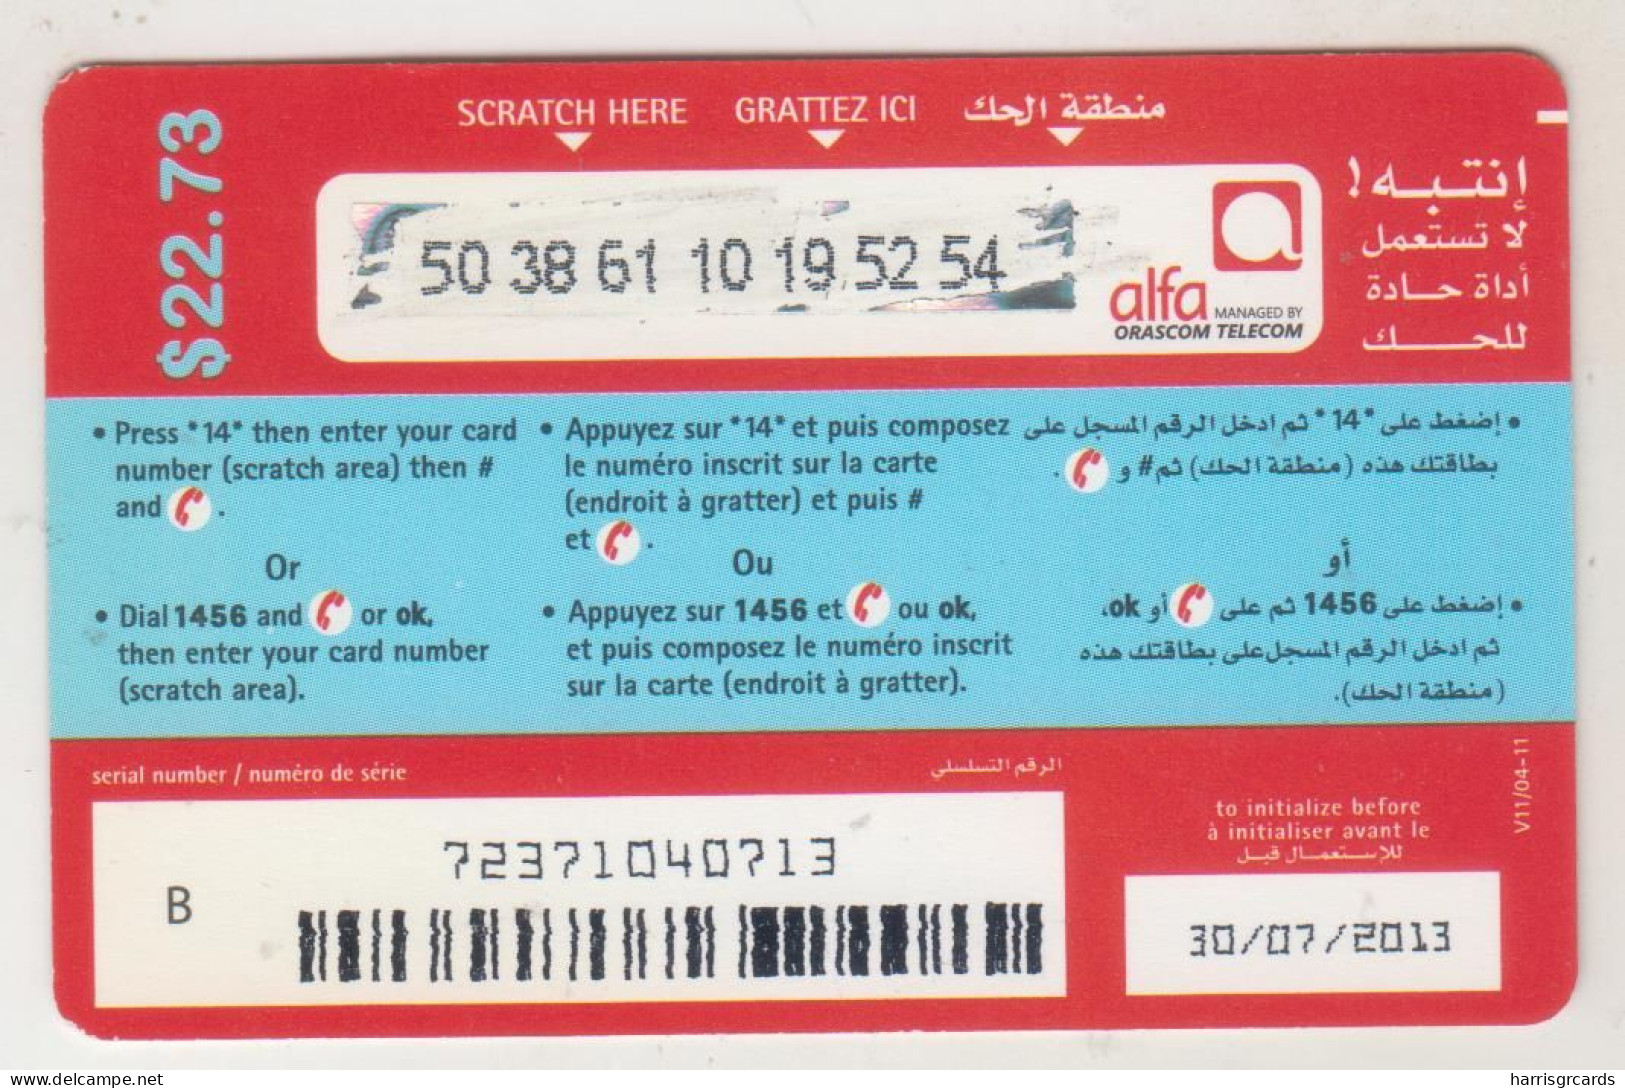 LEBANON - Jbeil Sea View , Alfa Recharge Card 22.73$, Exp.date 30/07/13, Used - Líbano